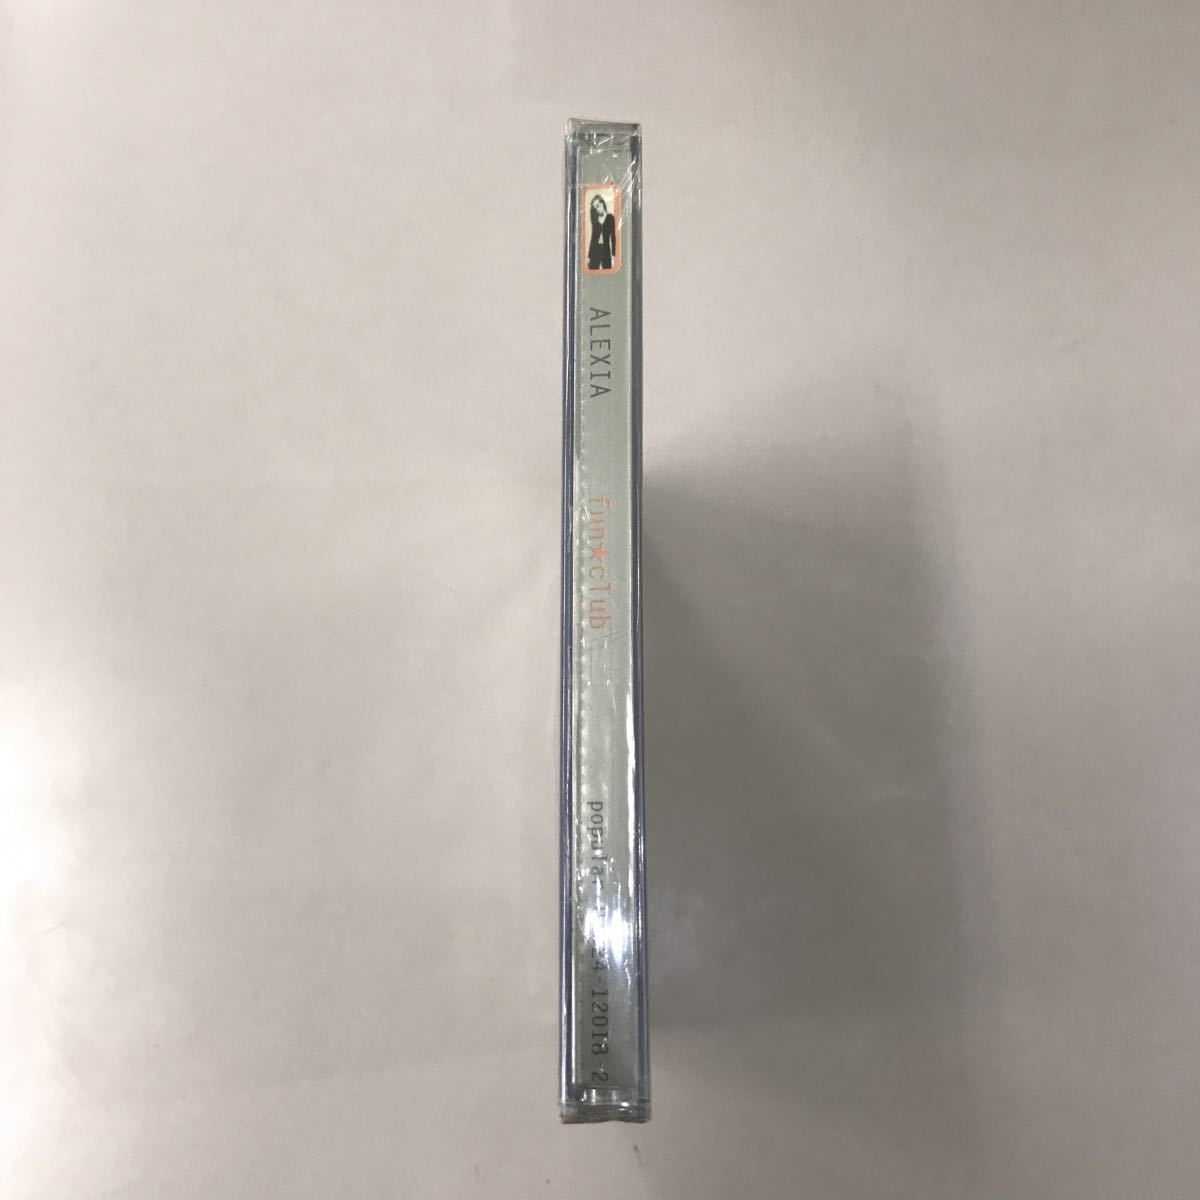 CD 輸入盤未開封【洋楽】長期保存品 ALEXIA